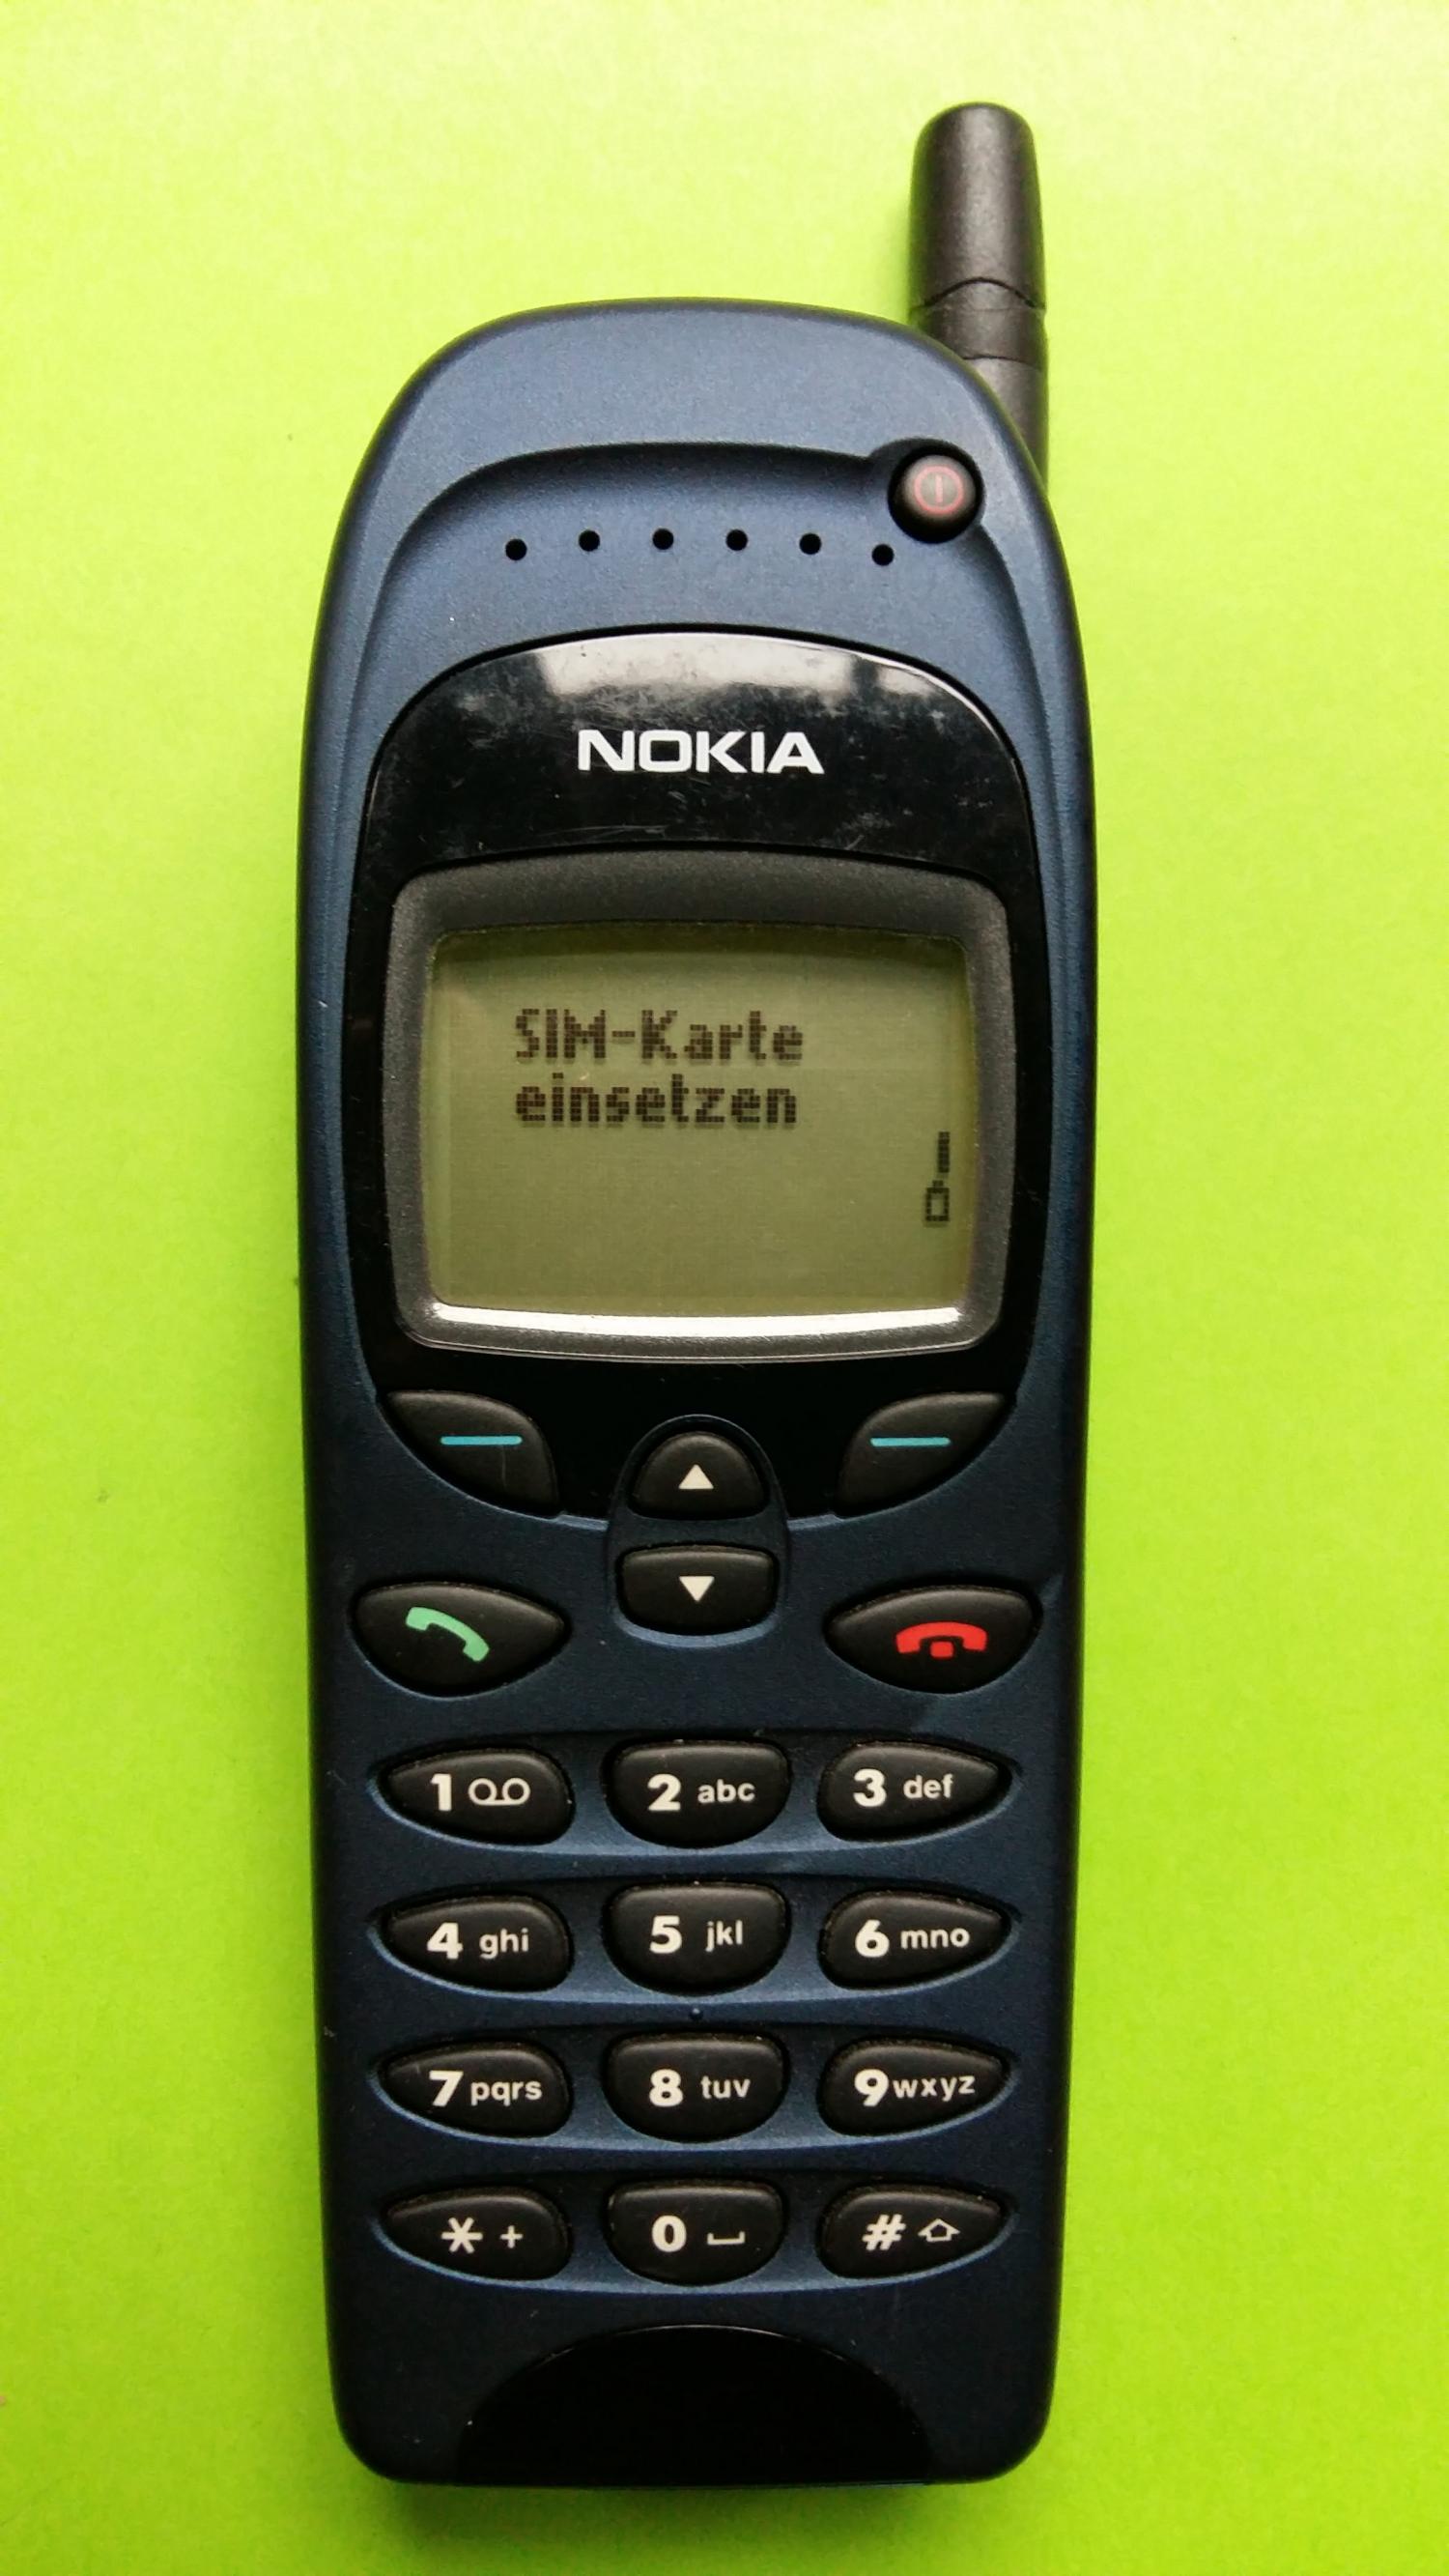 image-7304317-Nokia 6150 Sat (18)1.jpg